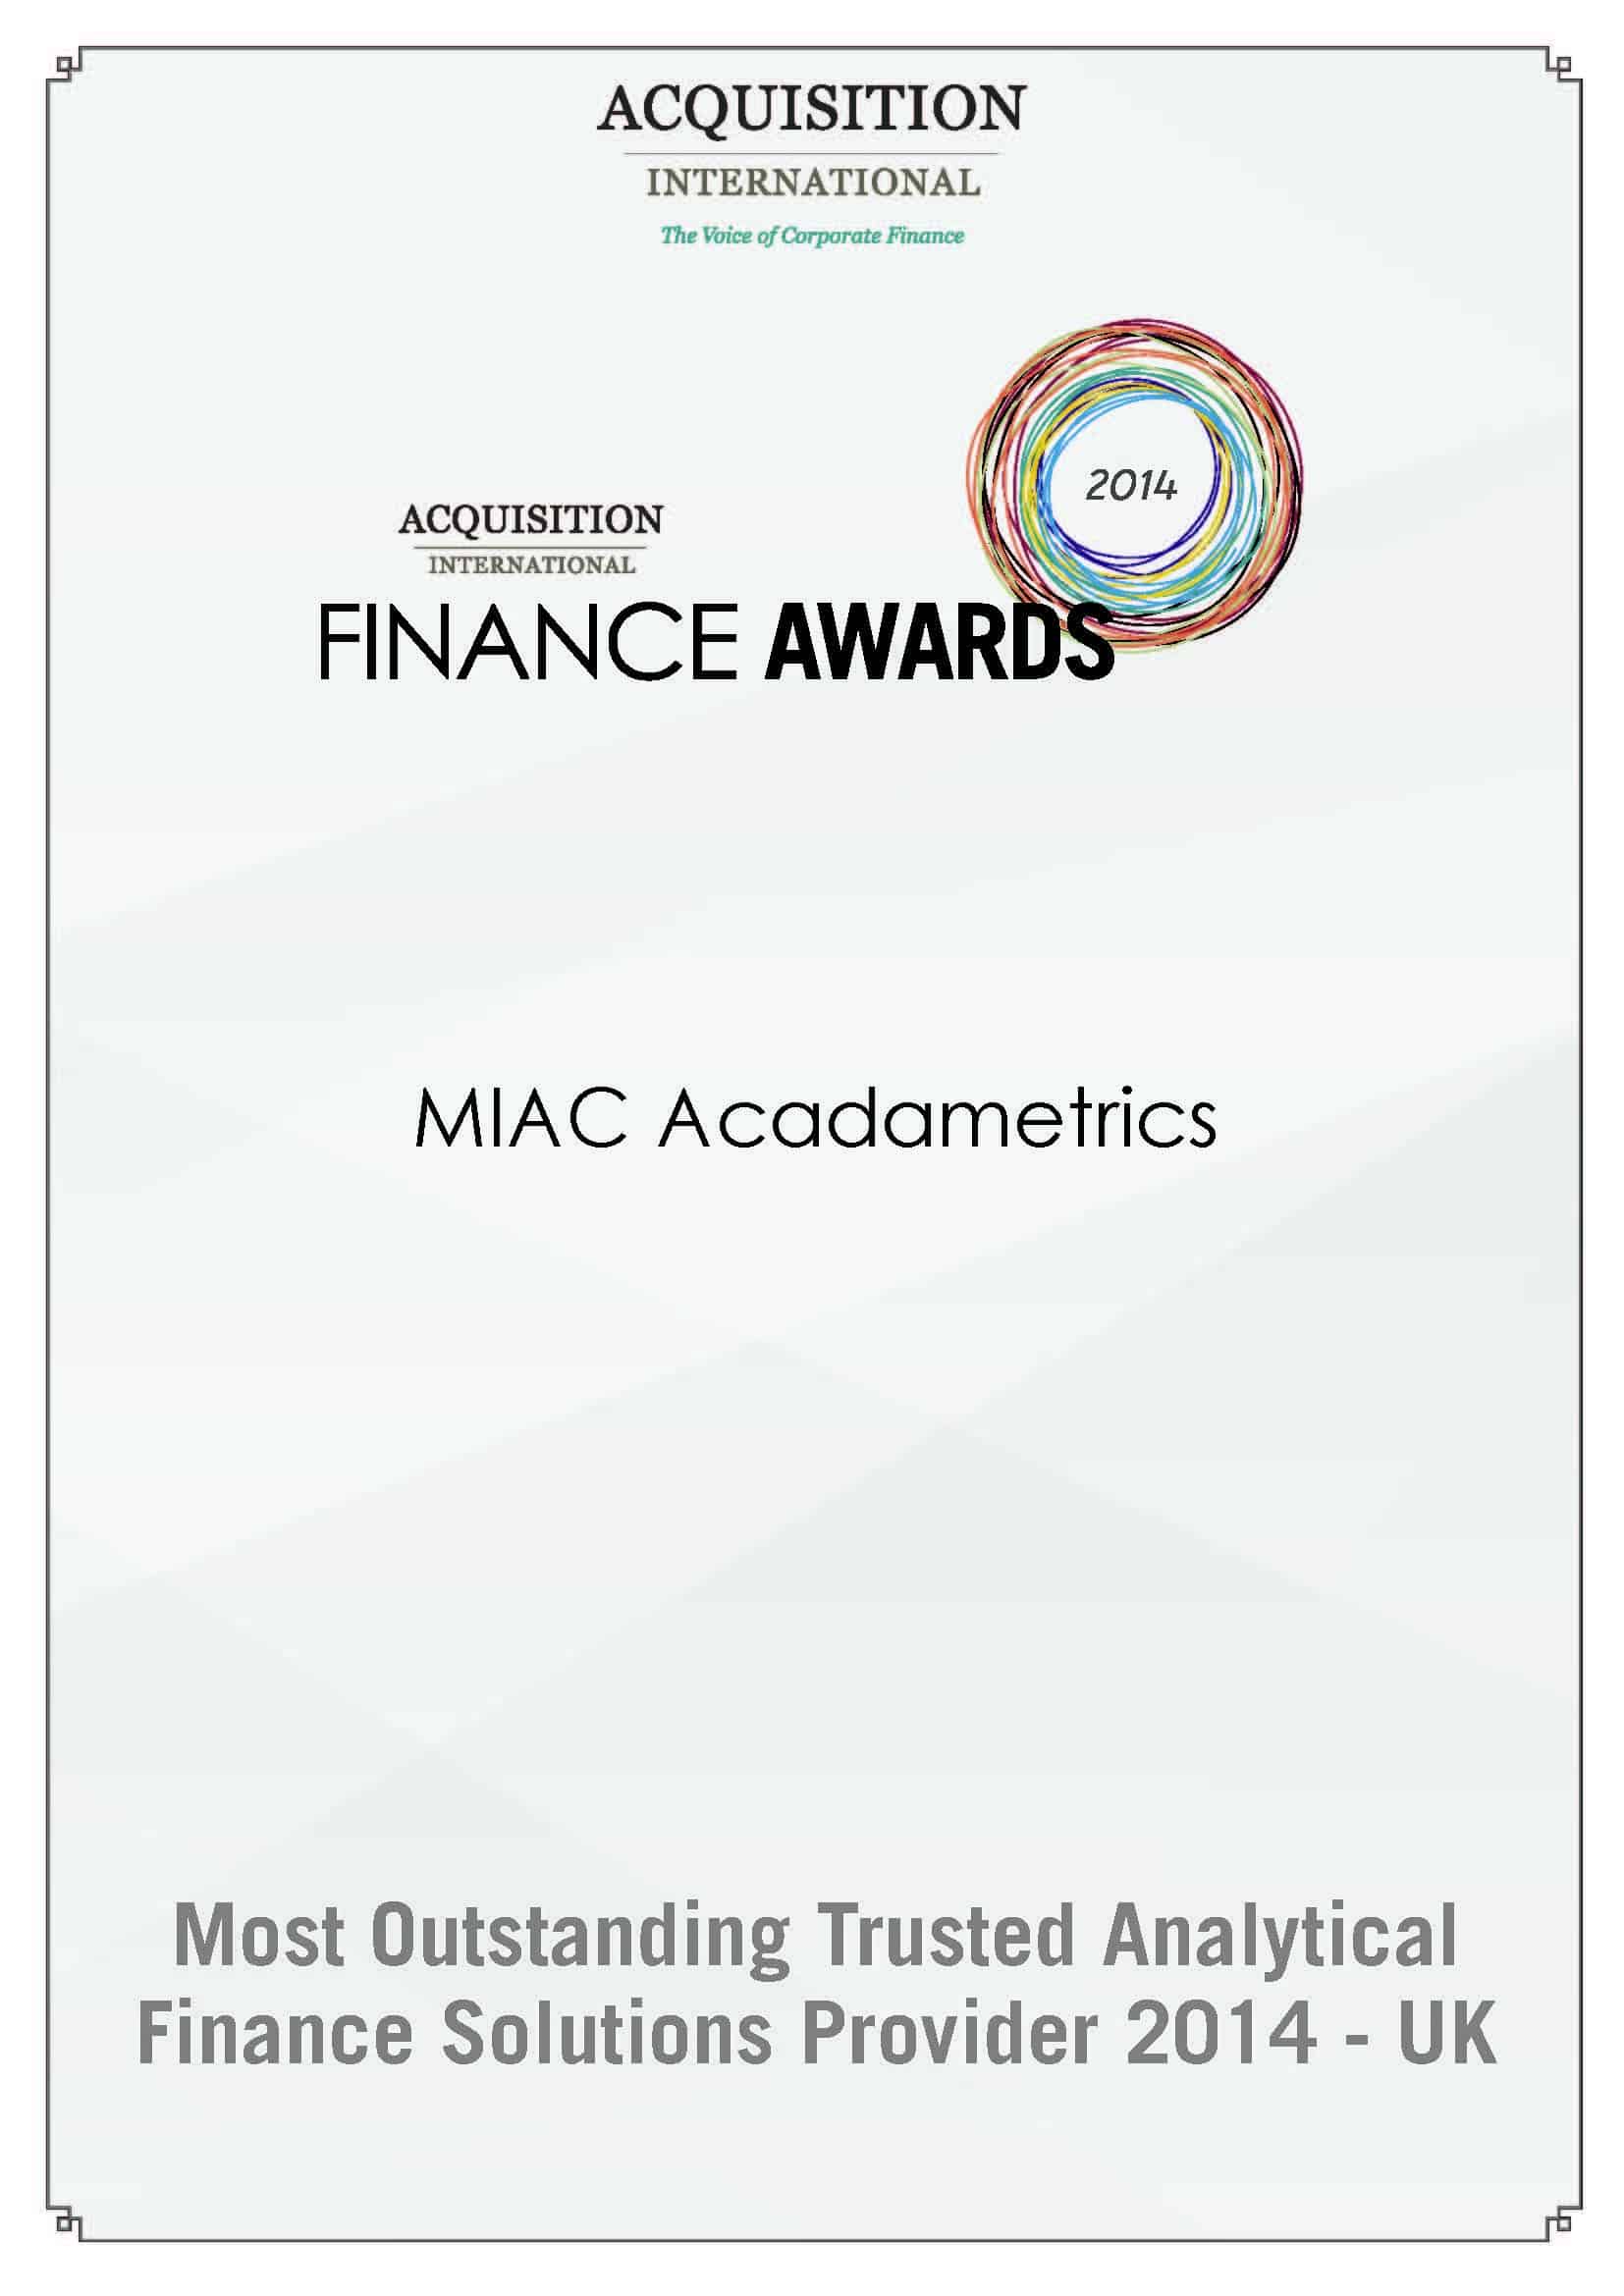 MIAC Acadametrics recognised in the Acquisition International Finance Awards 2014